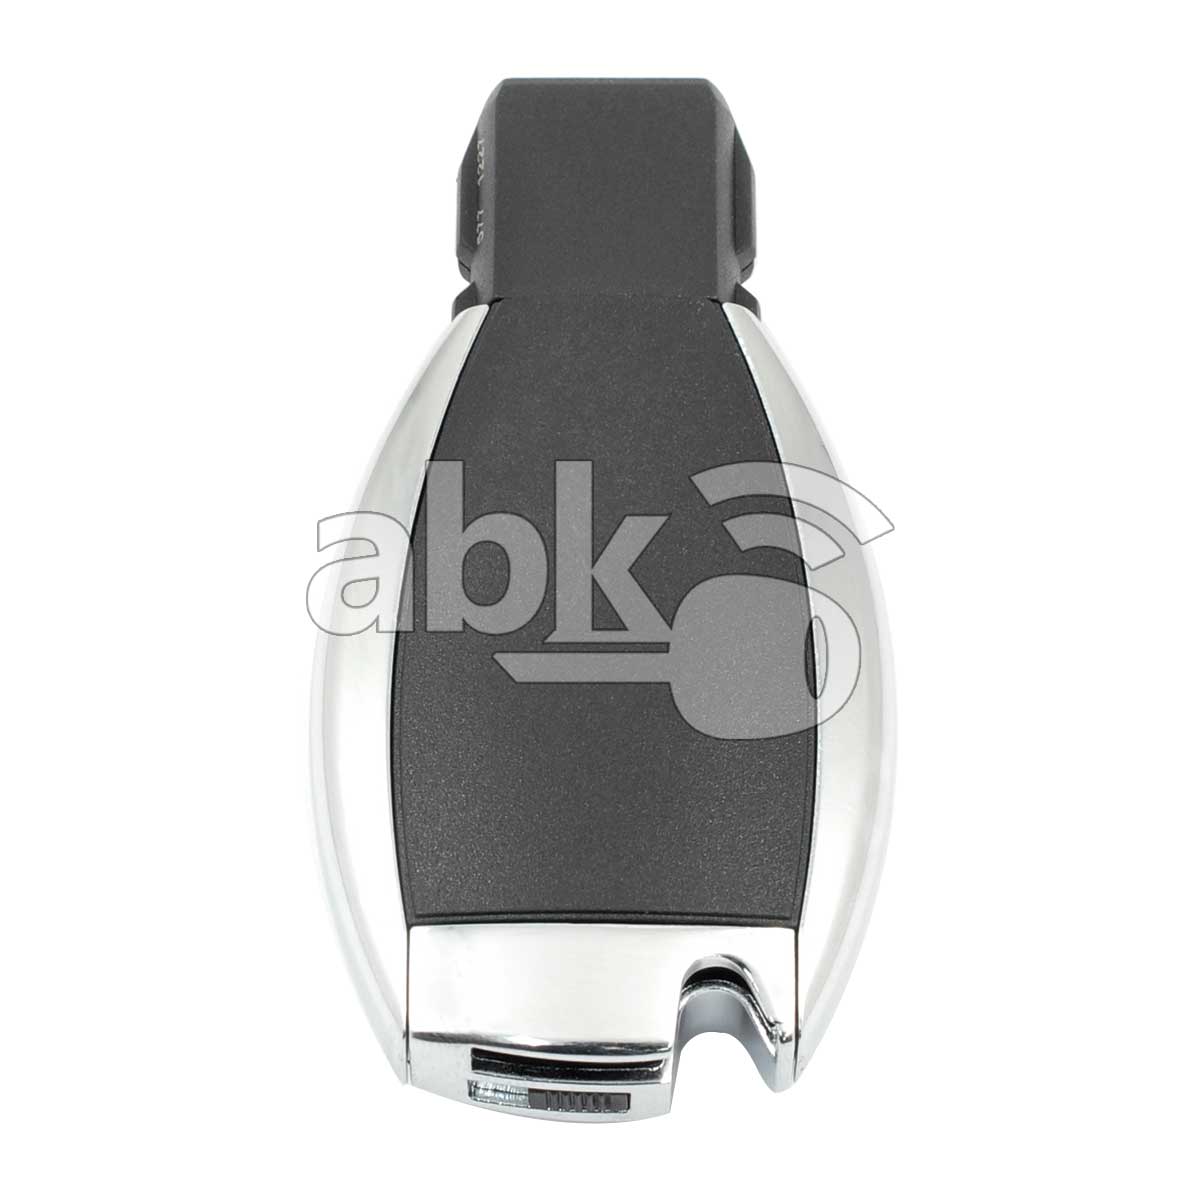 Mercedes Benz BGA BE 2007+ Smart Key Cover 3Buttons - ABK-4525 - ABKEYS.COM